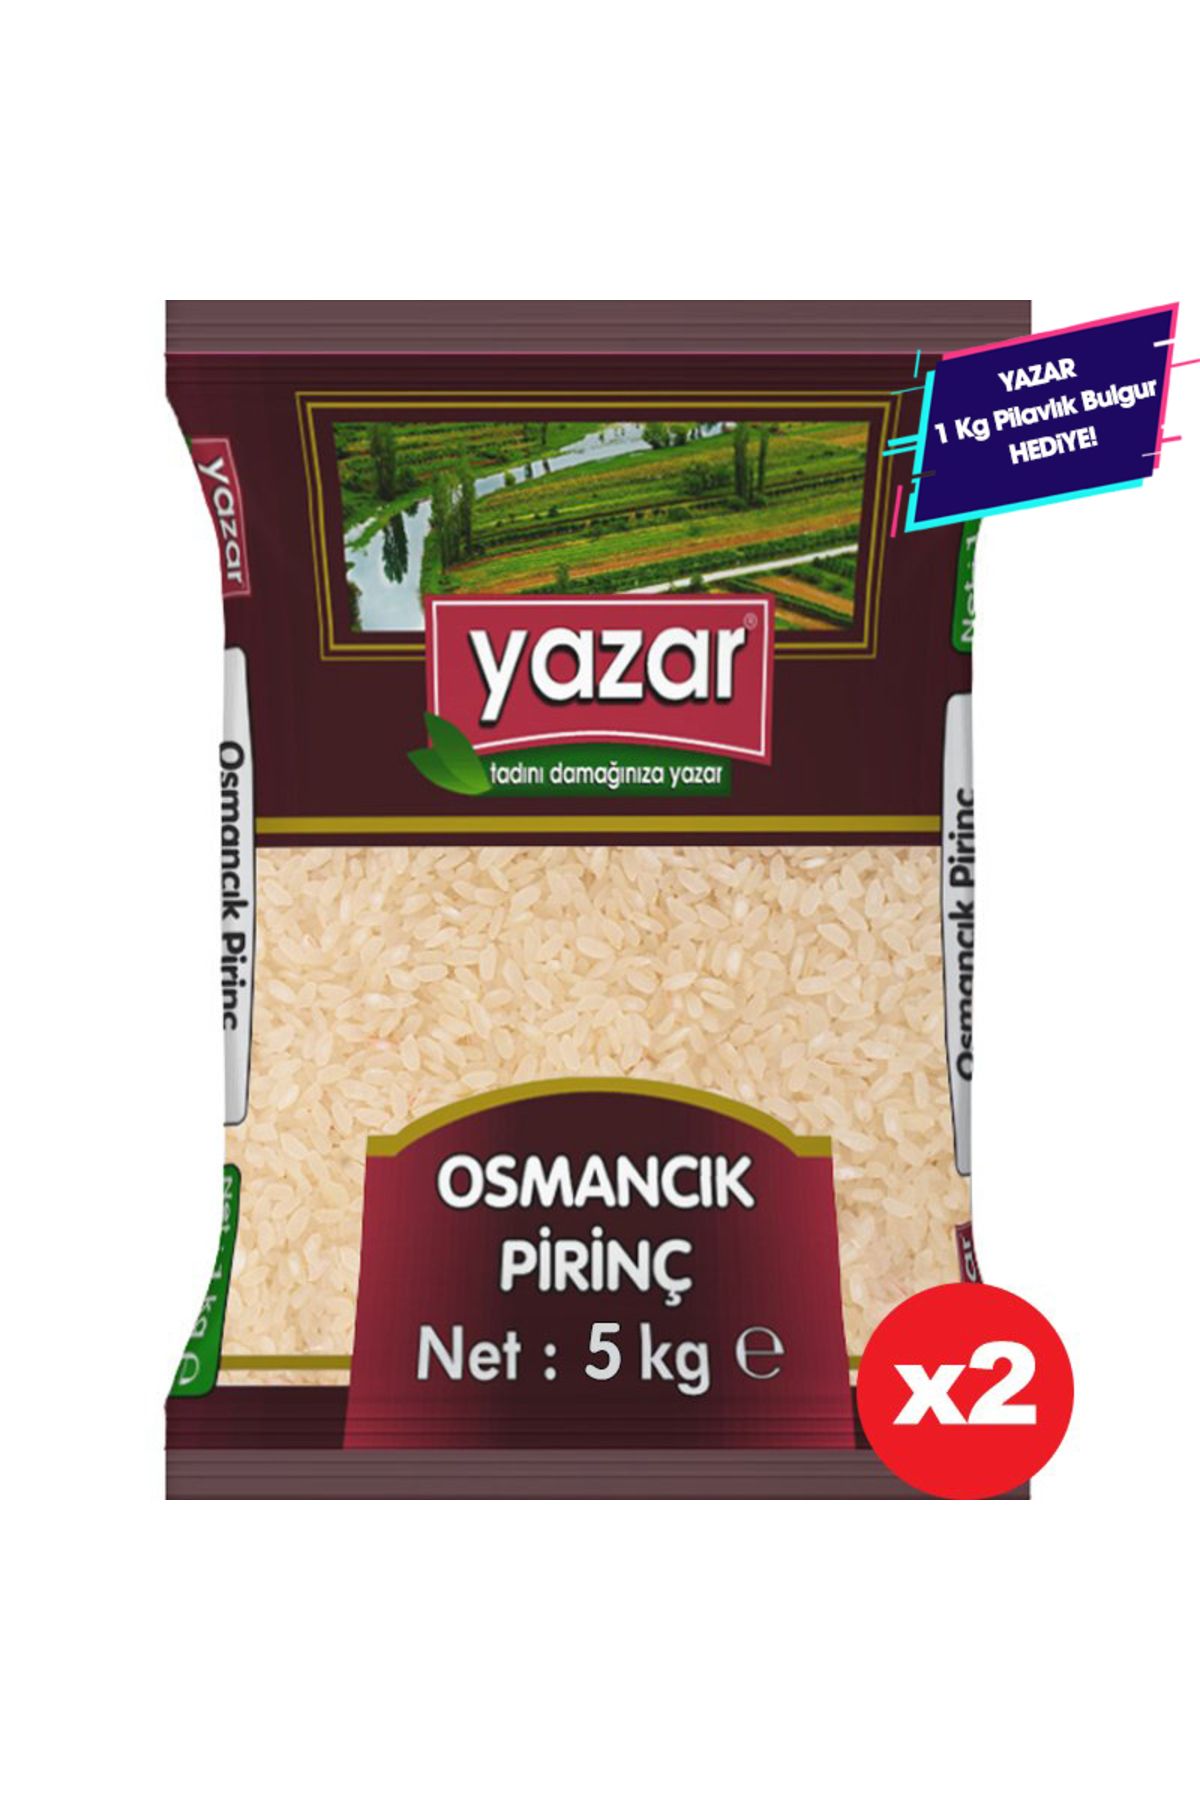 YAZAR Osmancık Pirinç 5 Kg x 2 Paket.